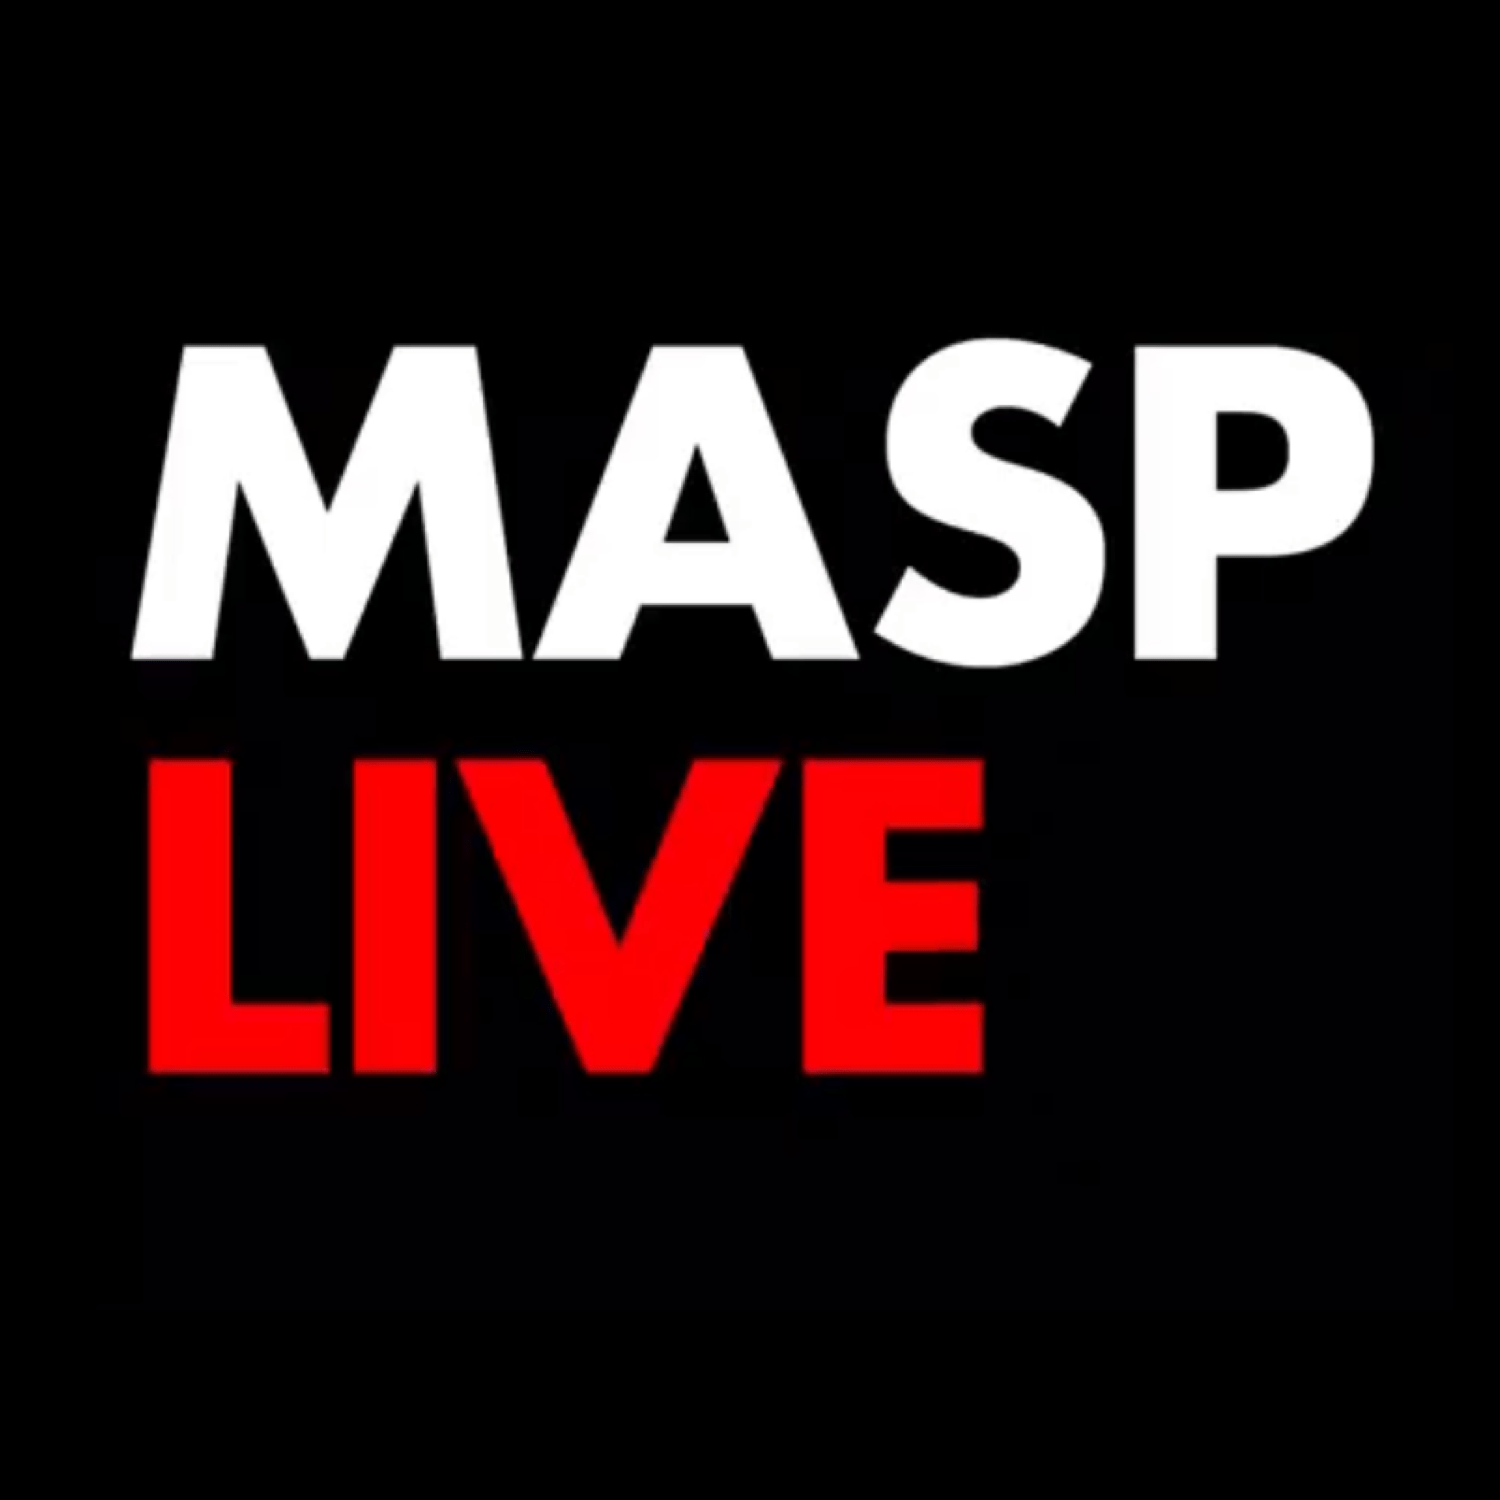 MASP LIVE